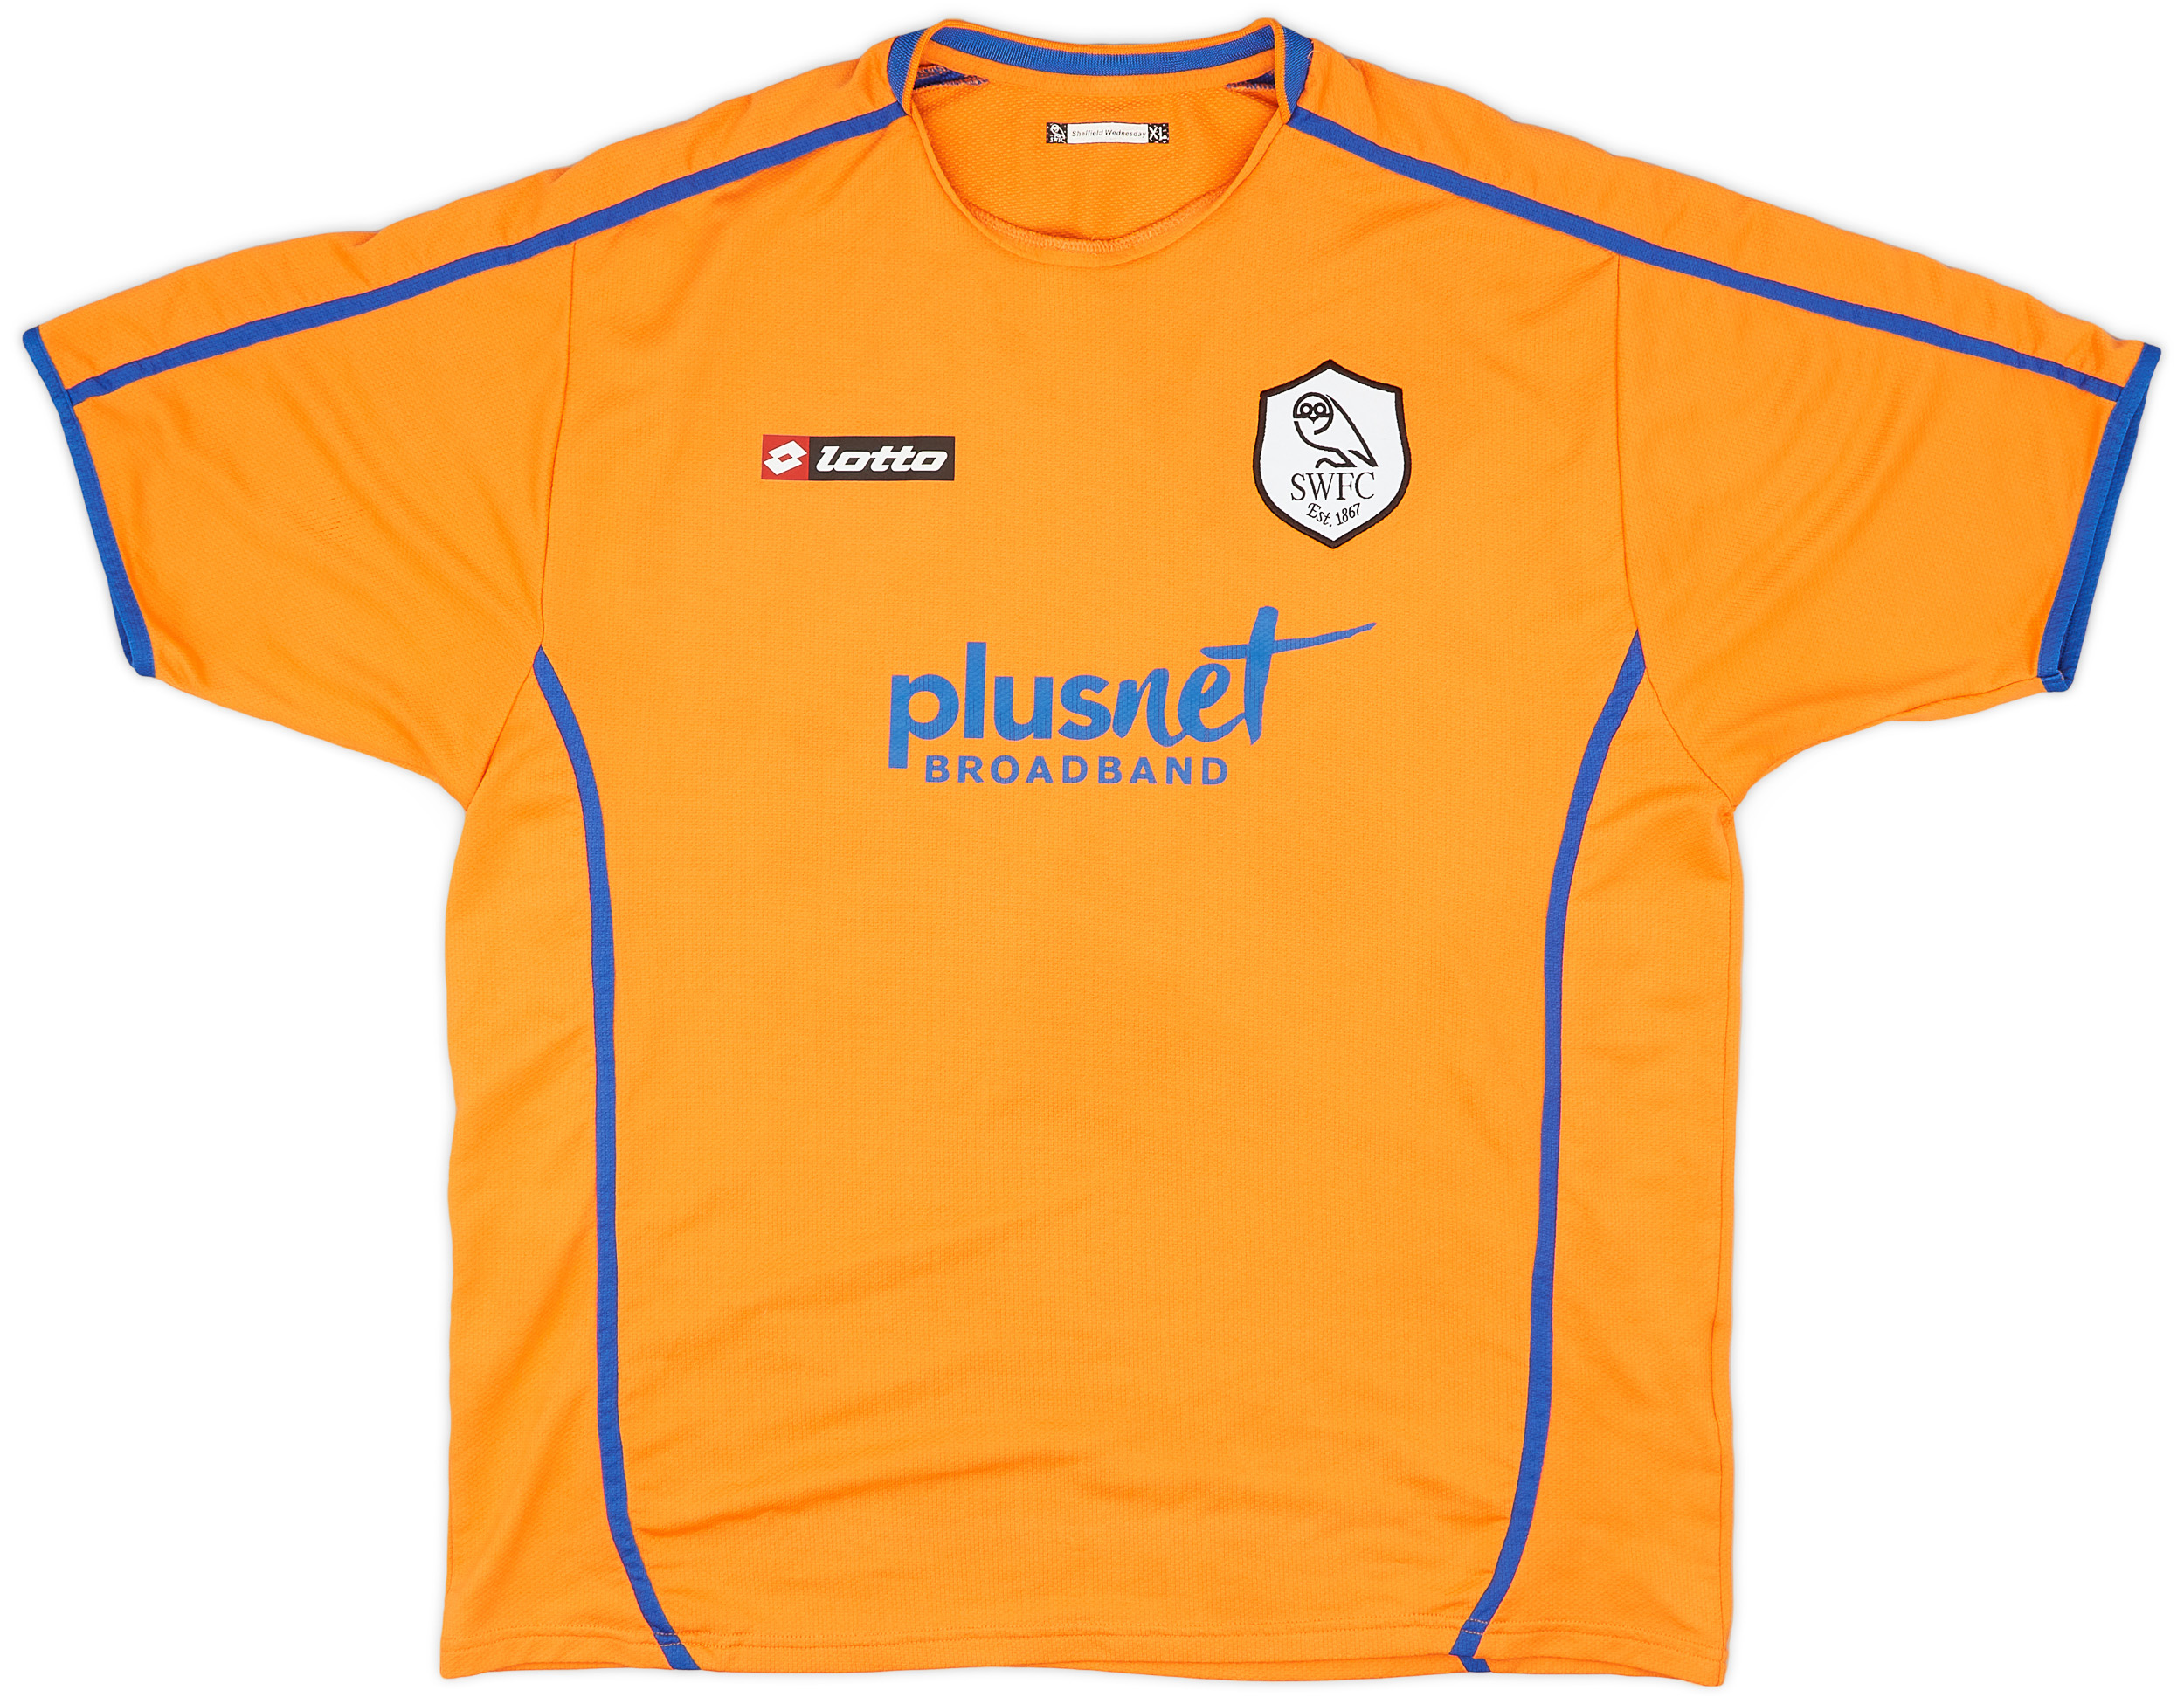 2007-09 Sheffield Wednesday Away Shirt - 7/10 - ()